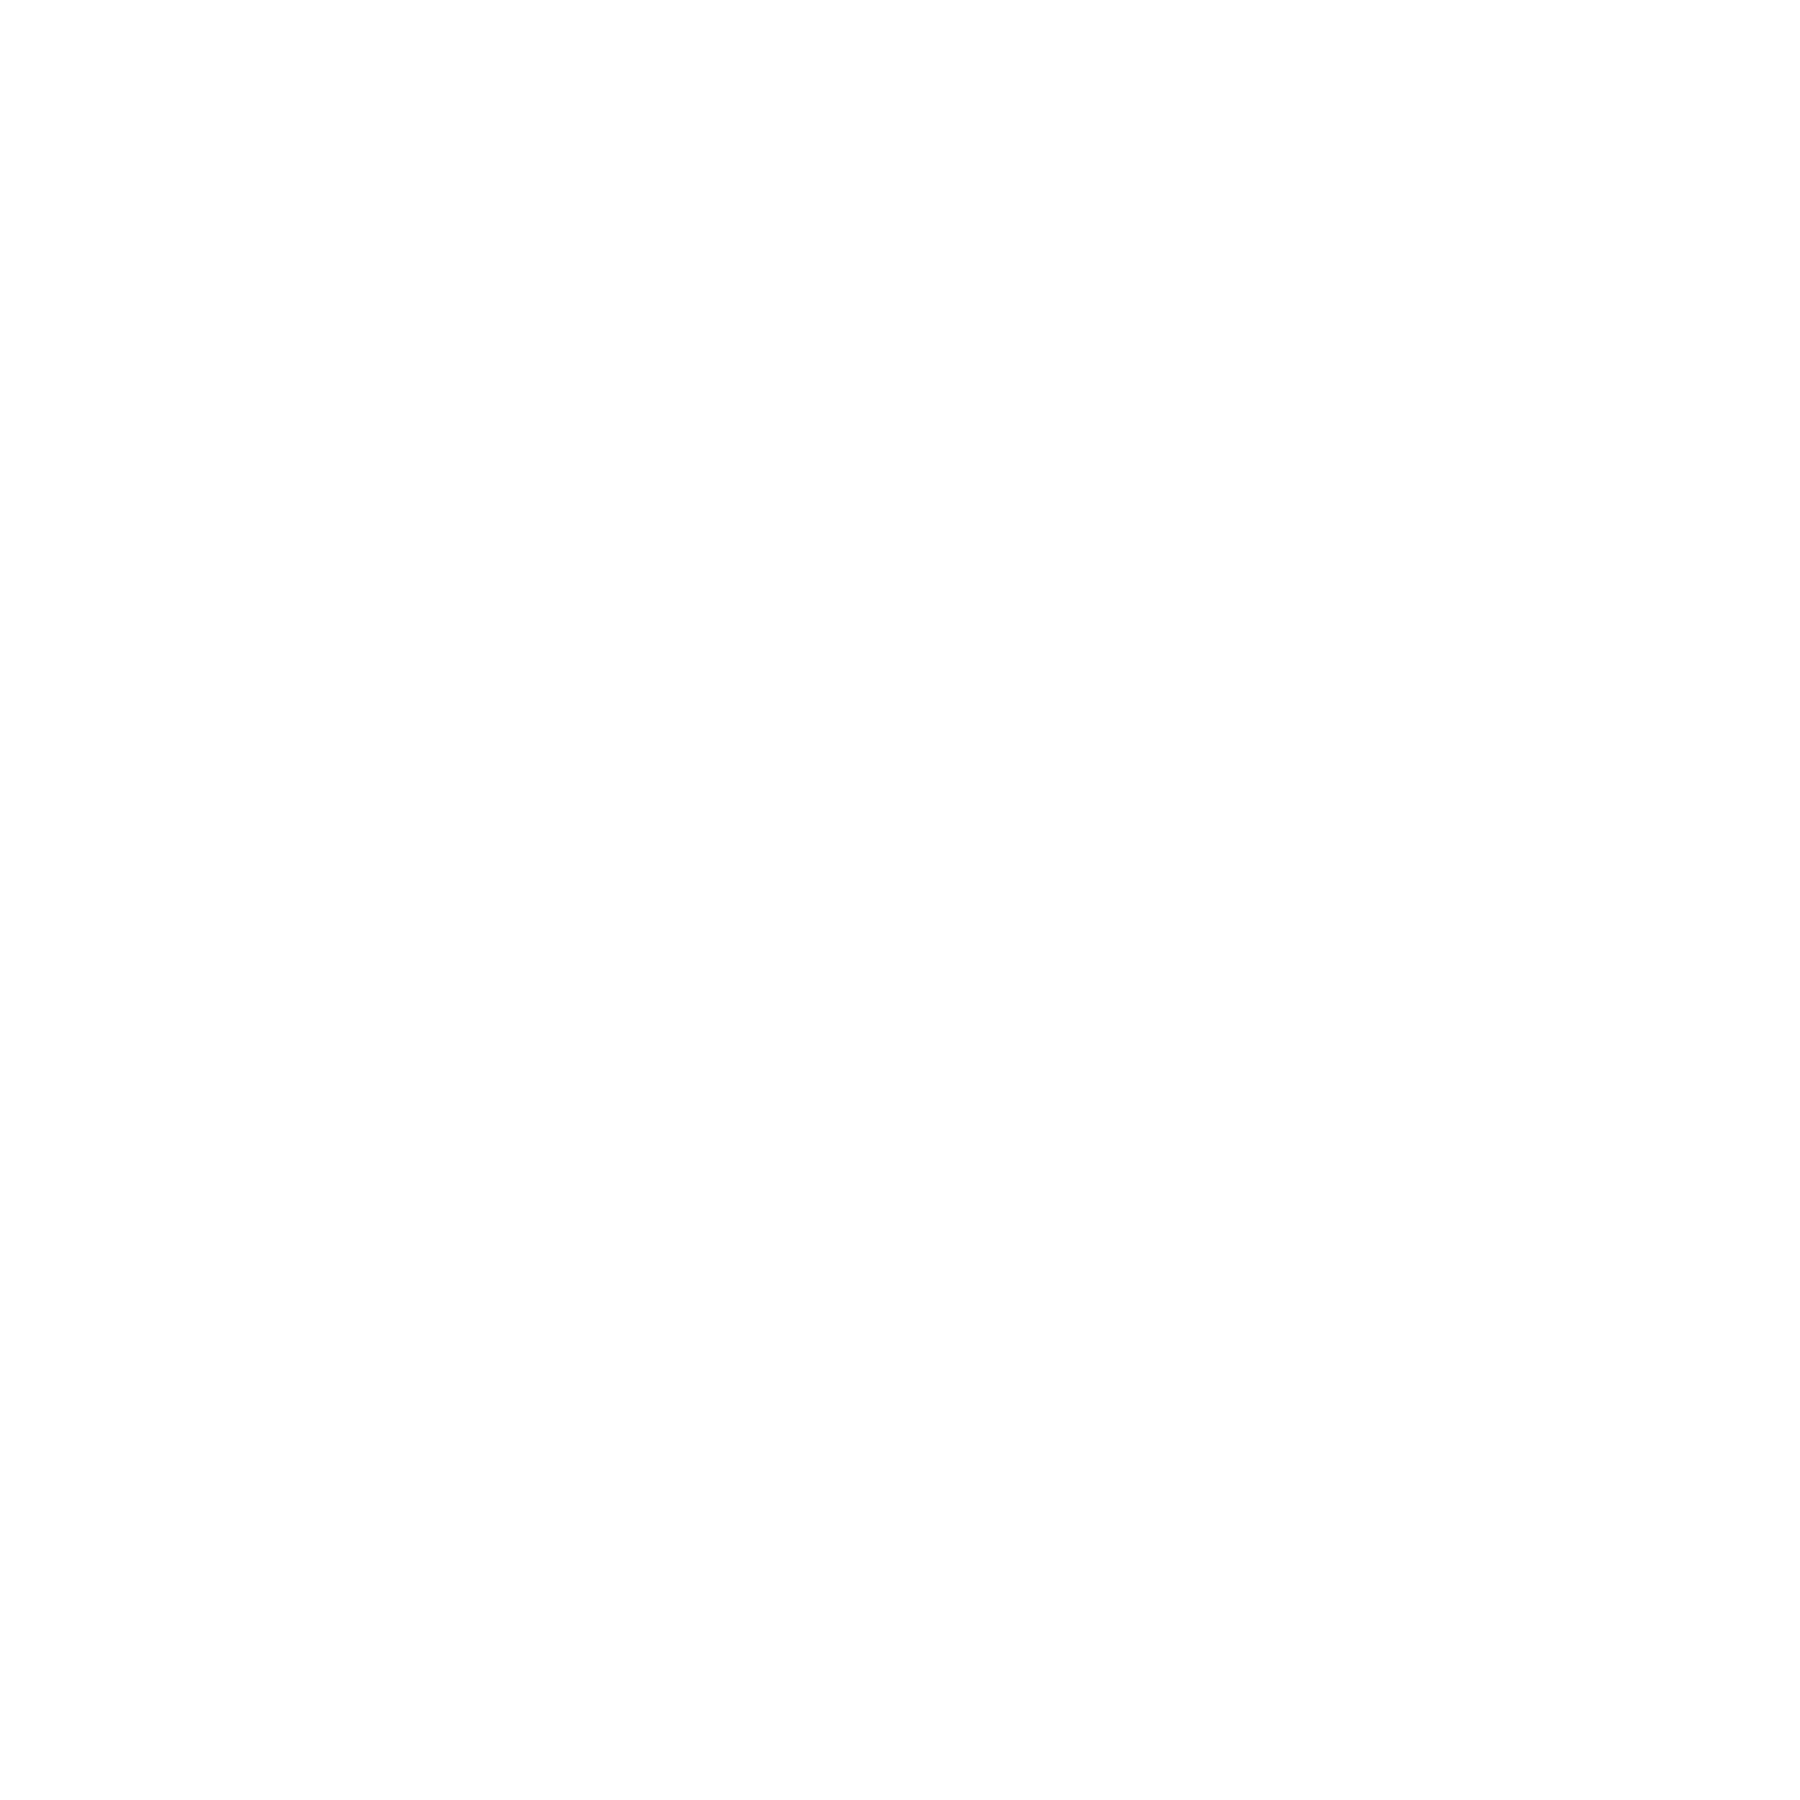 https://springfieldcannabisllc.com/wp-content/uploads/2020/03/CannabisLLC_Artboard-2-e1583695004824.png